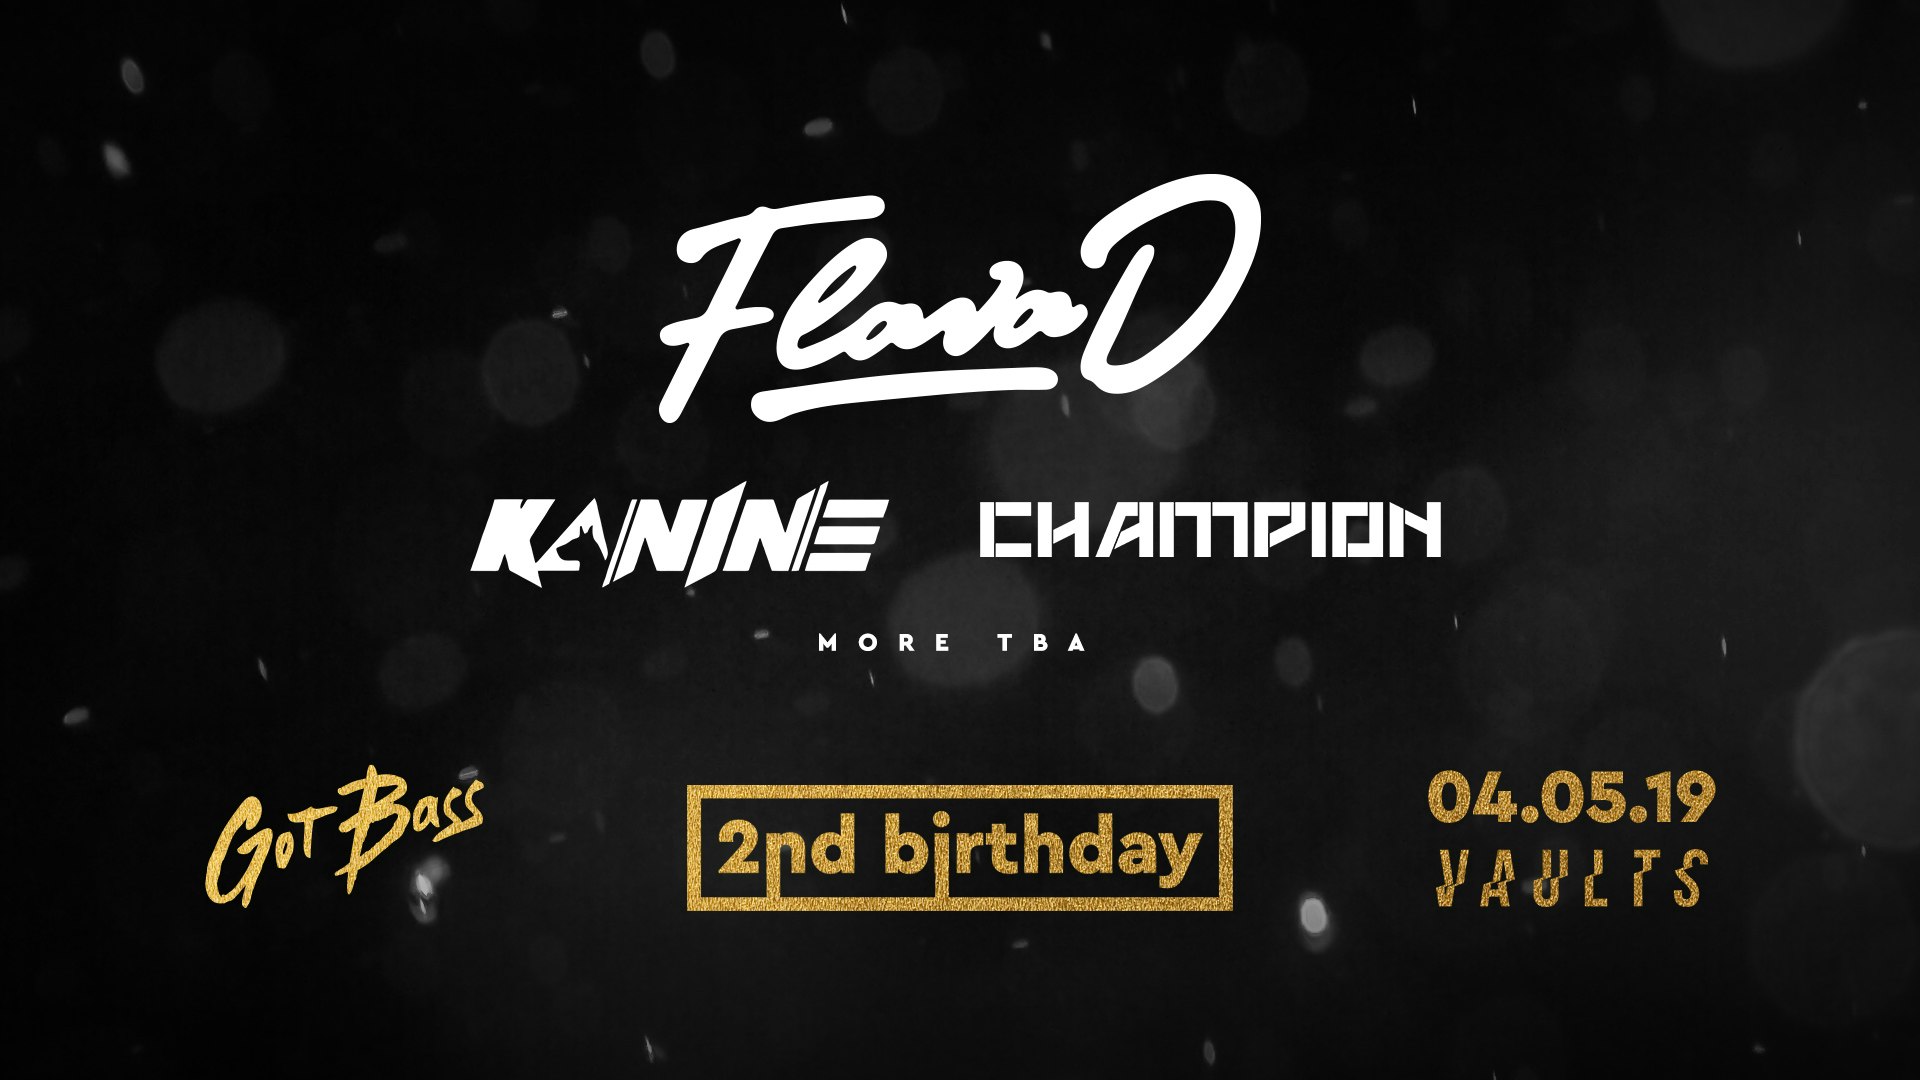 Got Bass 2nd Birthday w/ Flava D, Kanine, Champion & more…